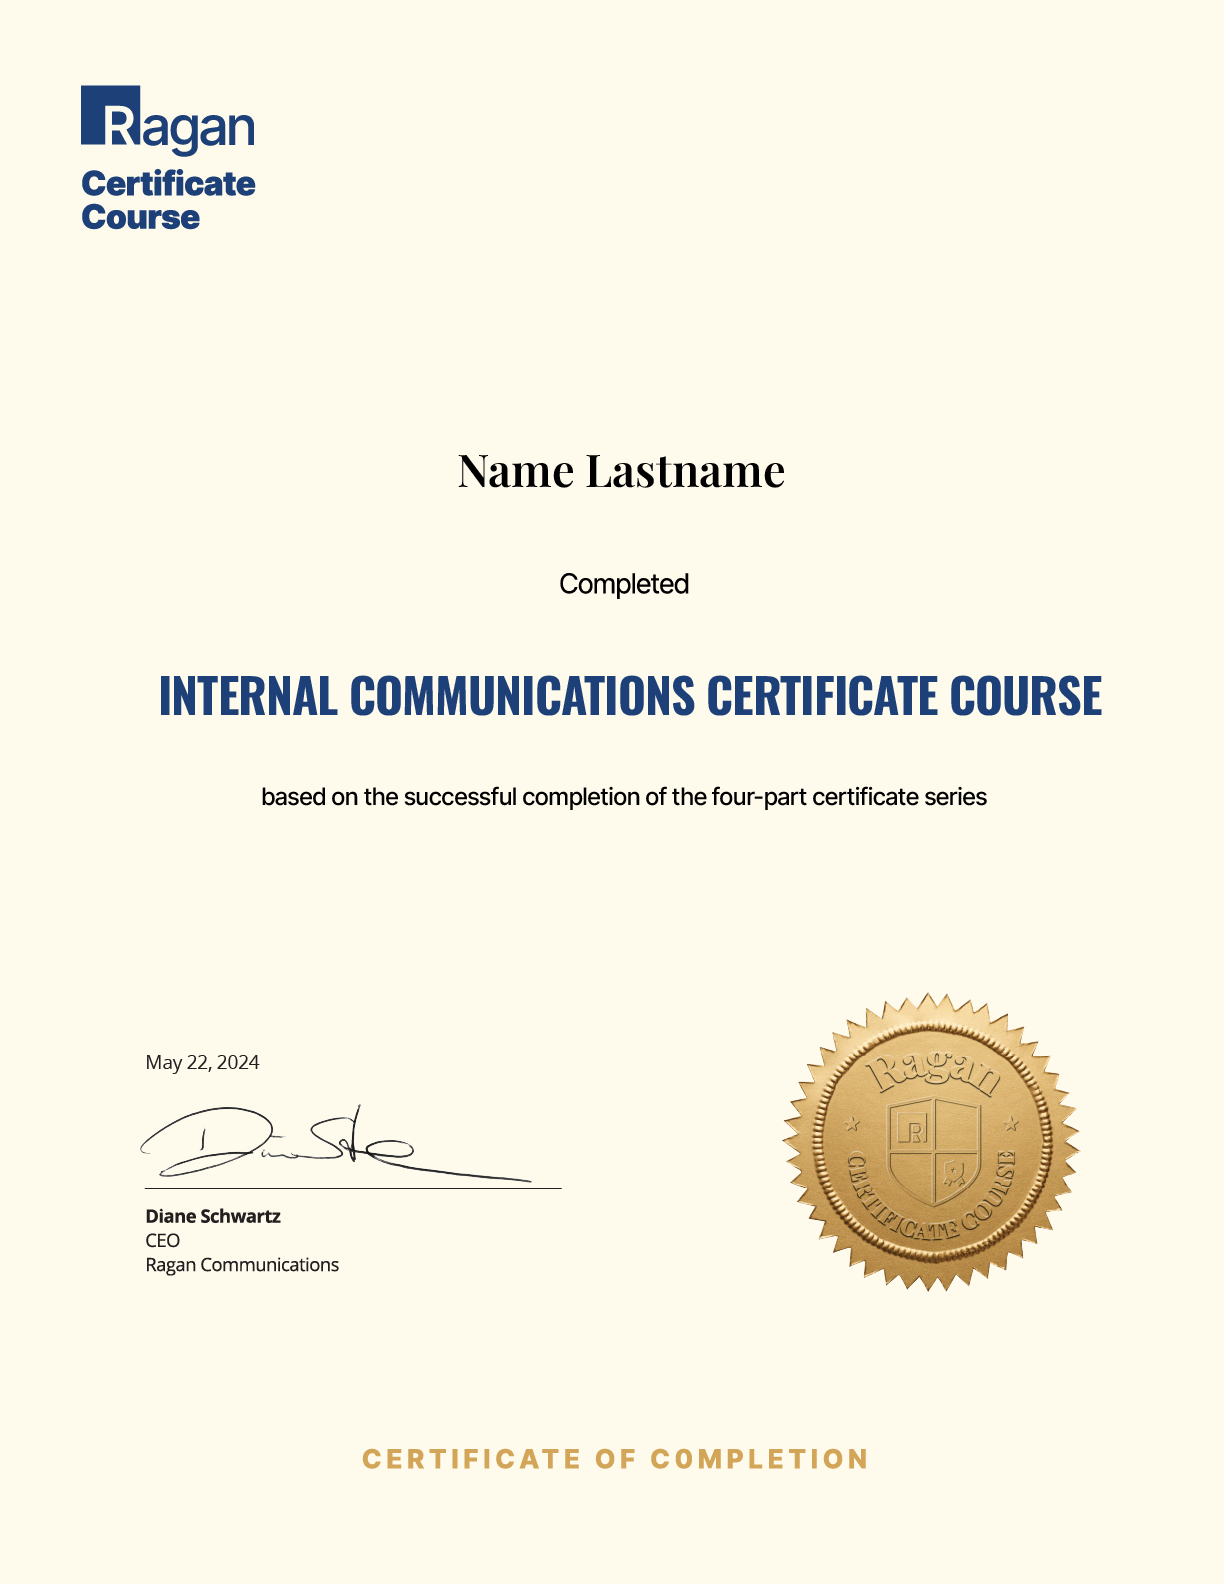 Internal Communications Certificate Course Certificate